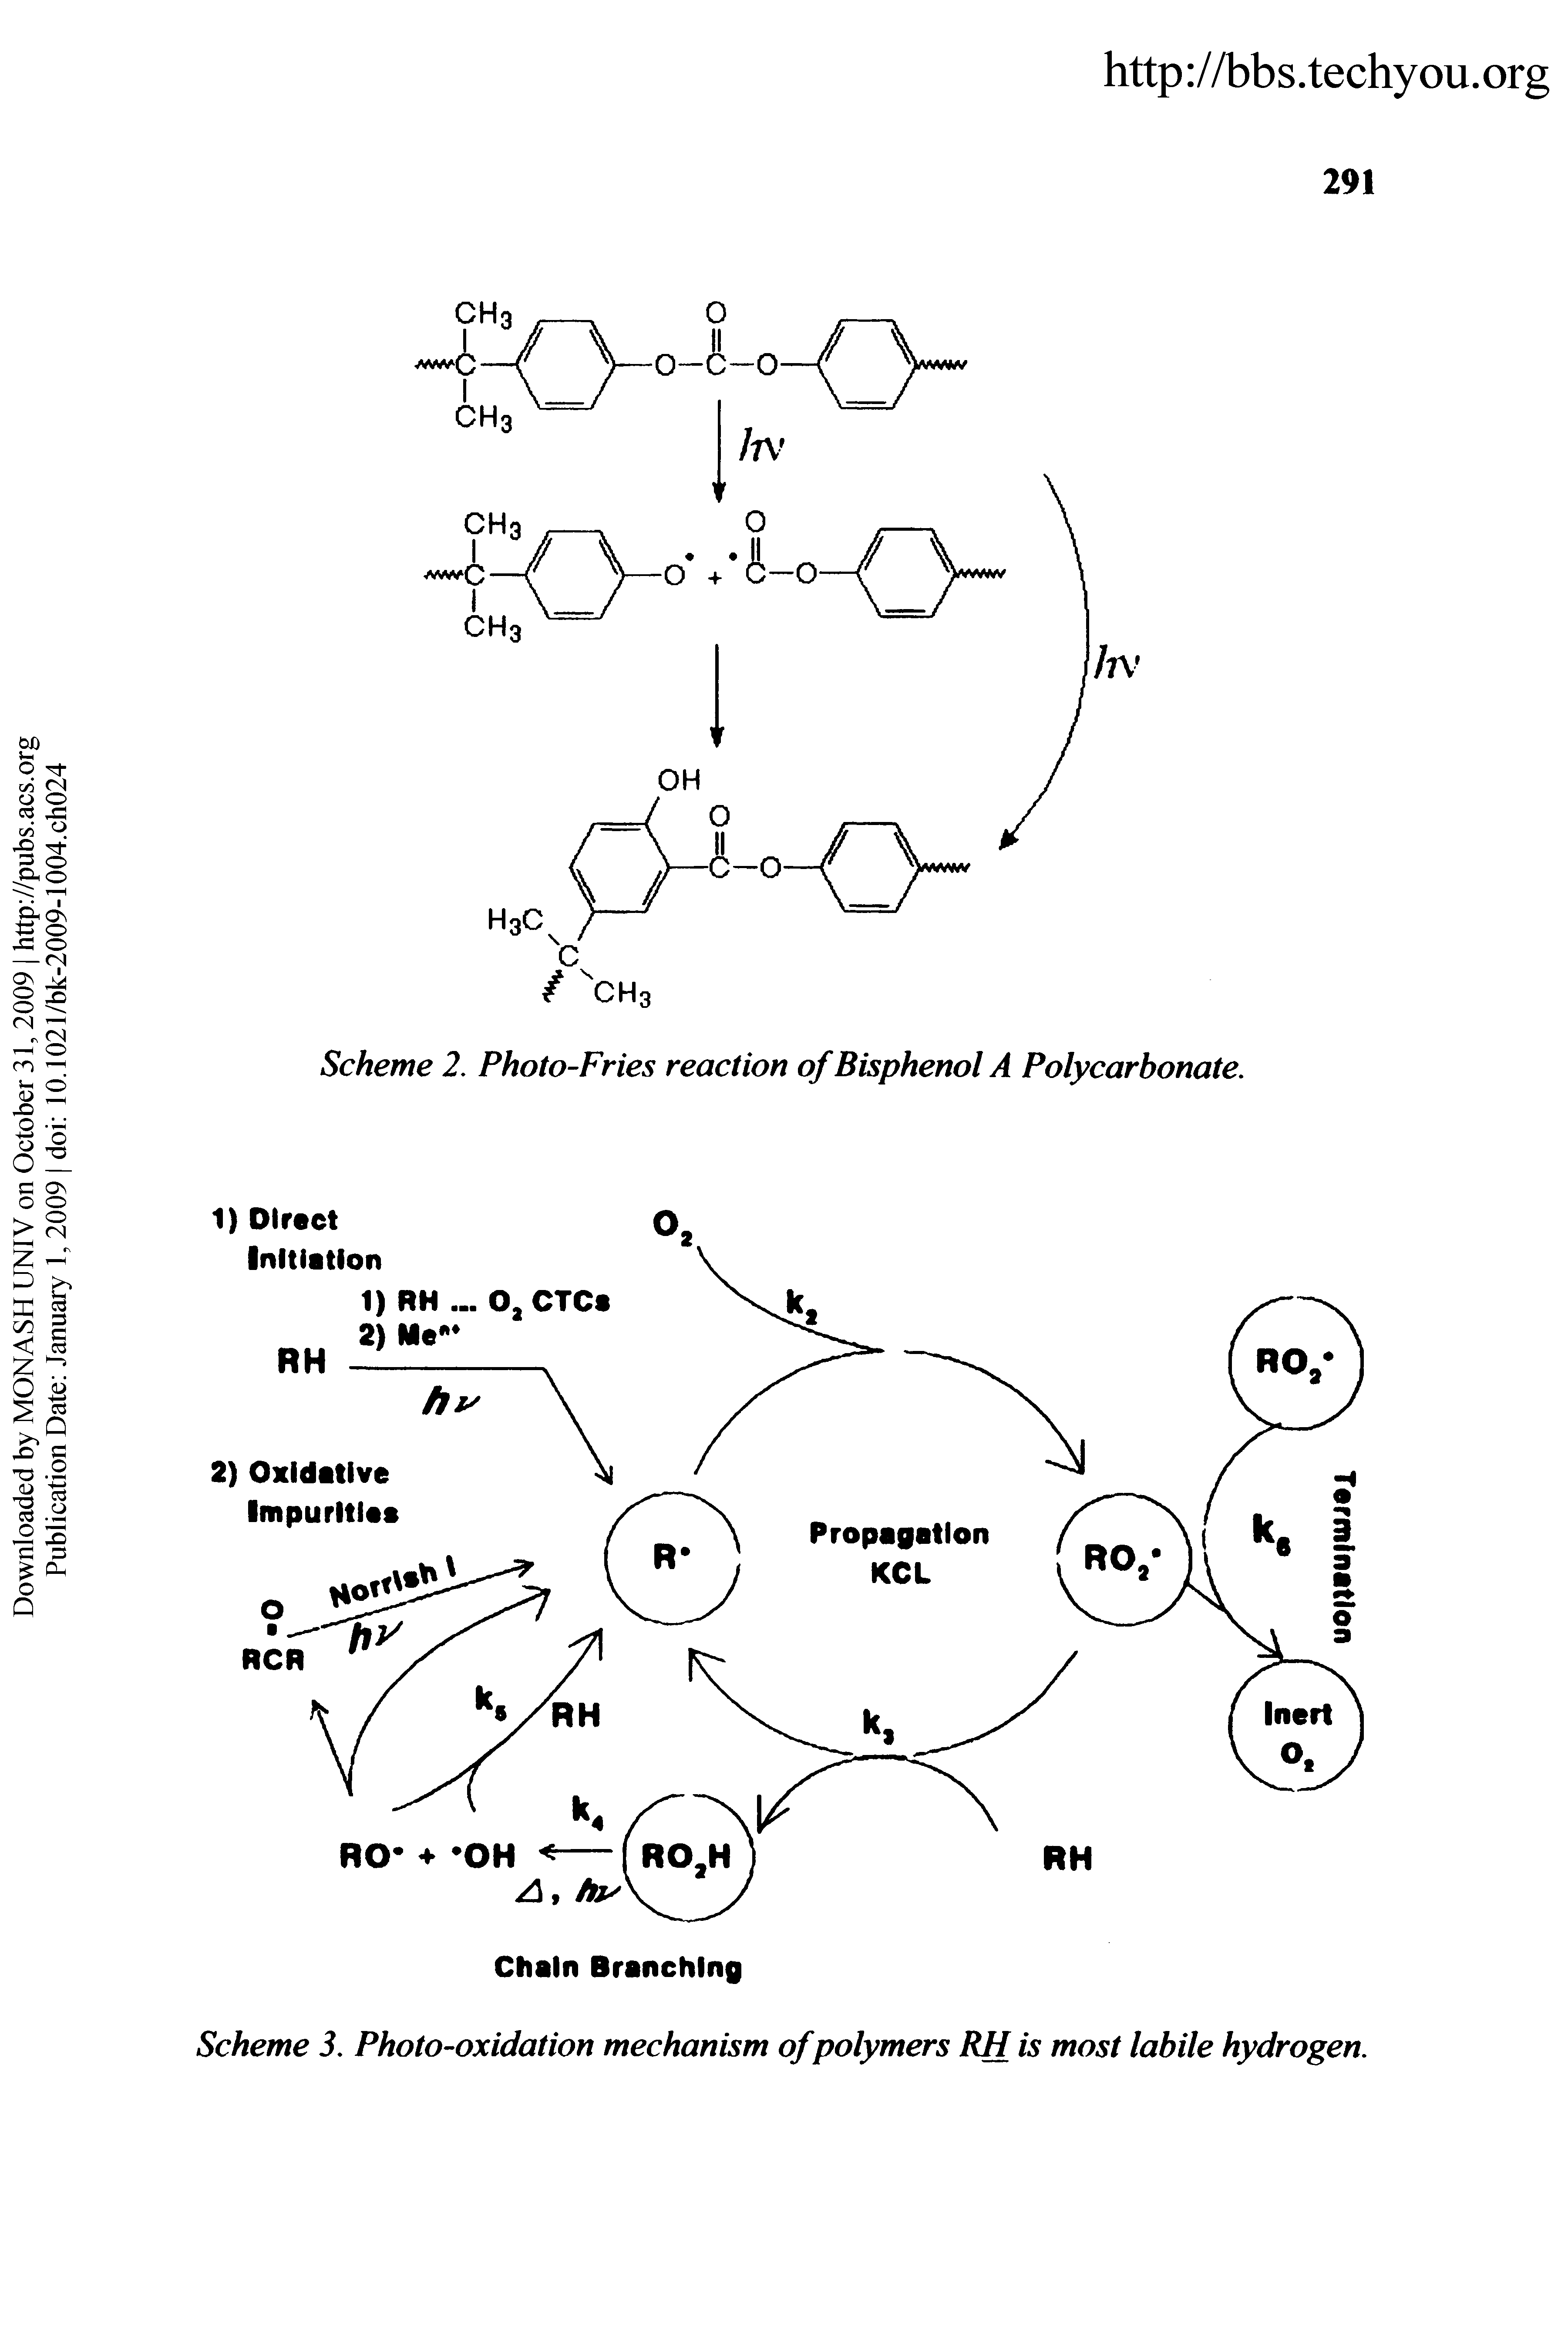 Scheme 2. Photo-Fries reaction of Bisphenol A Polycarbonate.